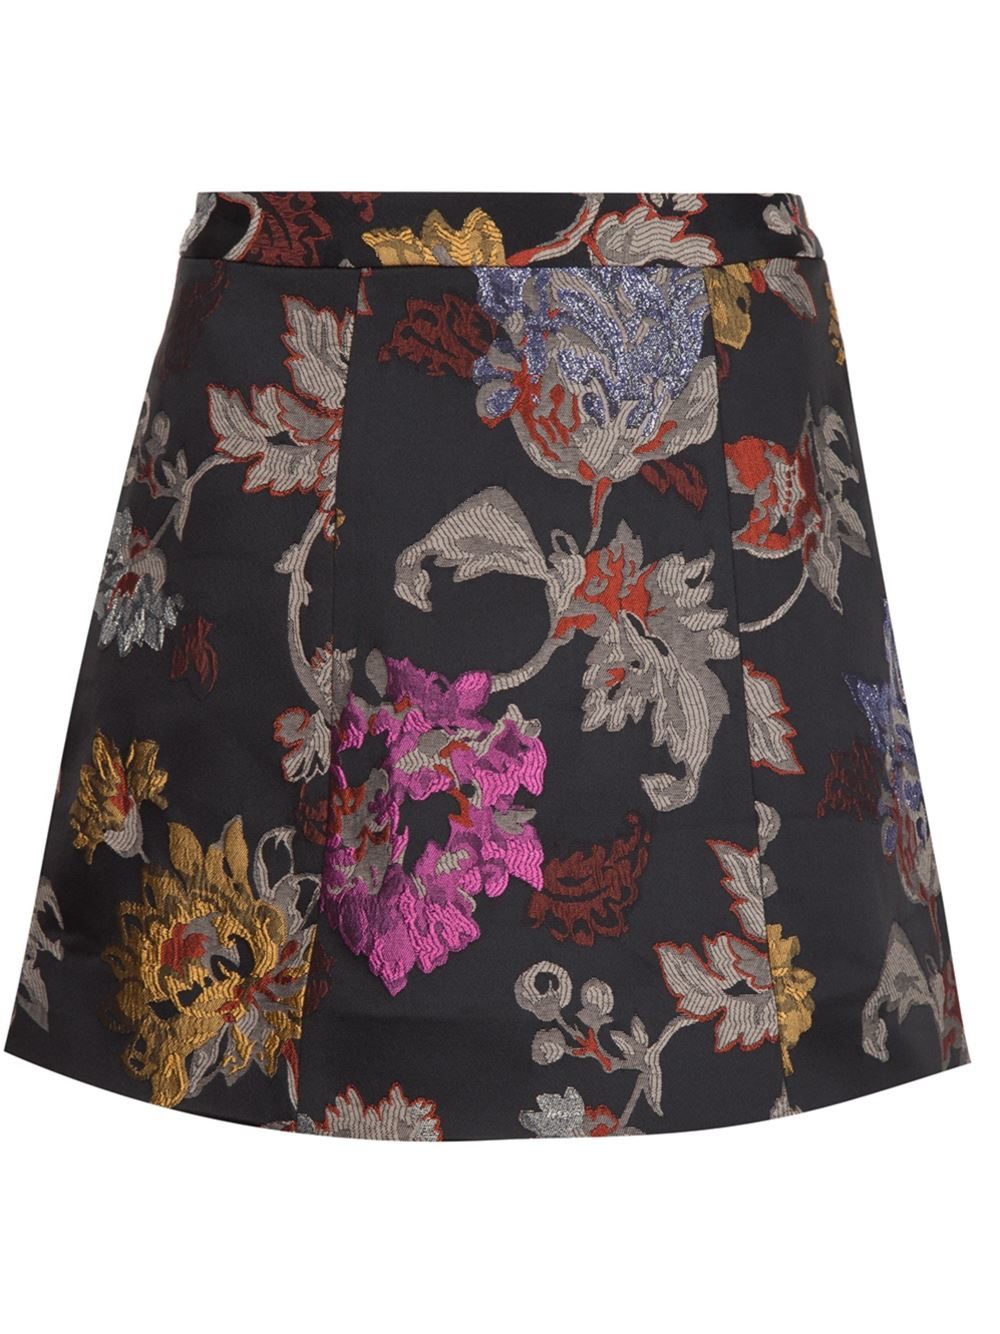 Lyst - Alice + Olivia Floral Brocade Mini Skirt in Black